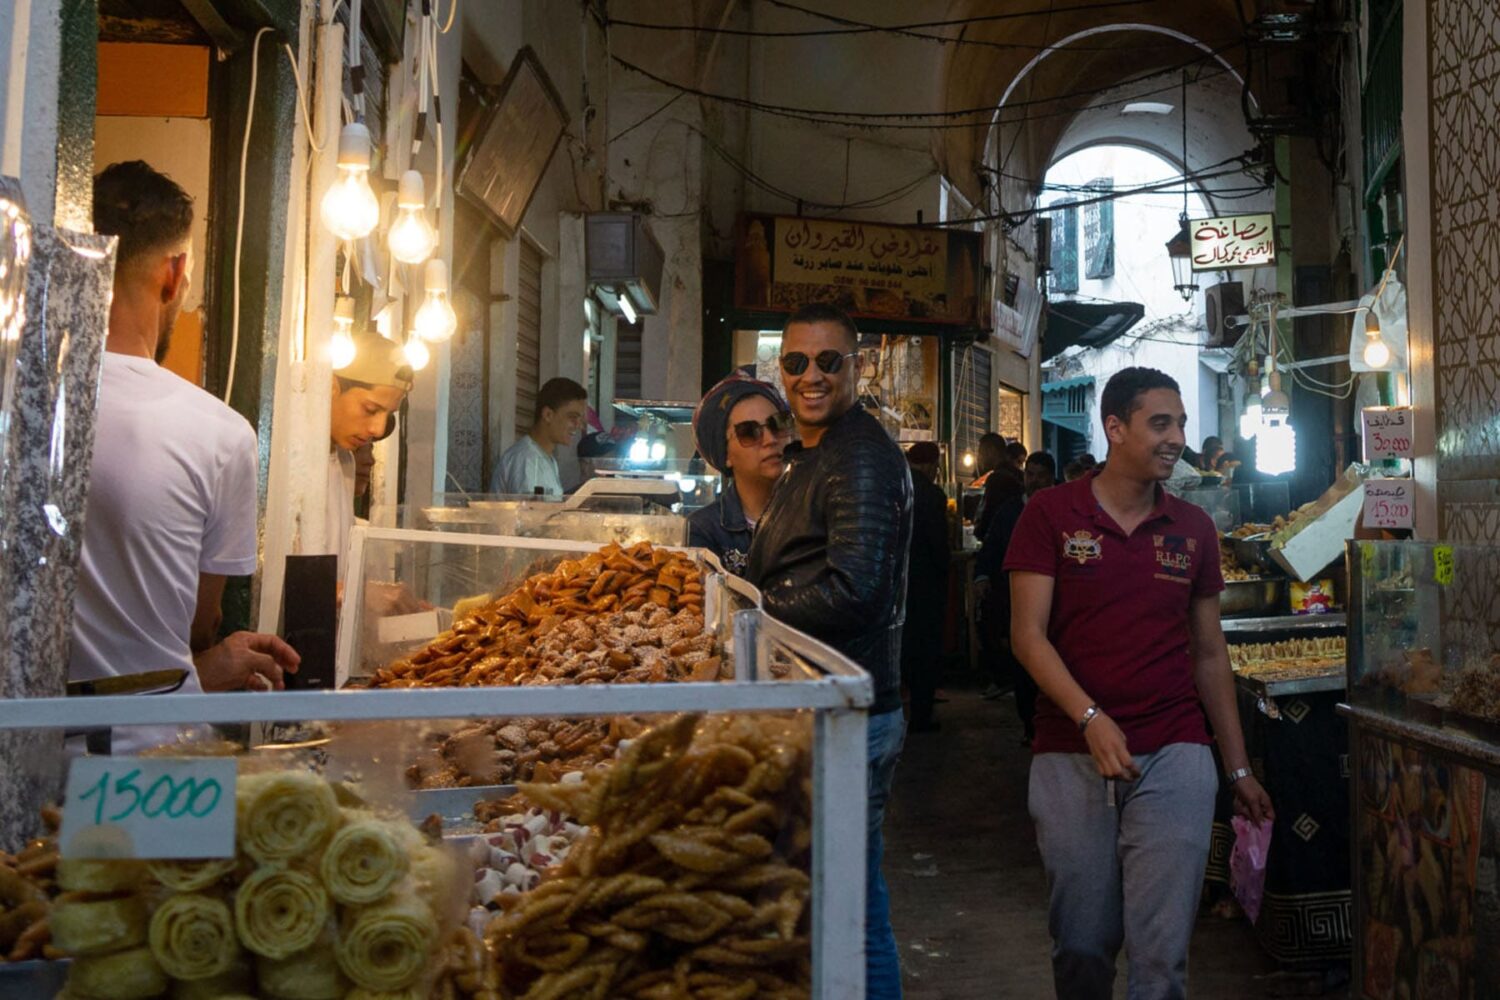 Medina Tunis: private tour